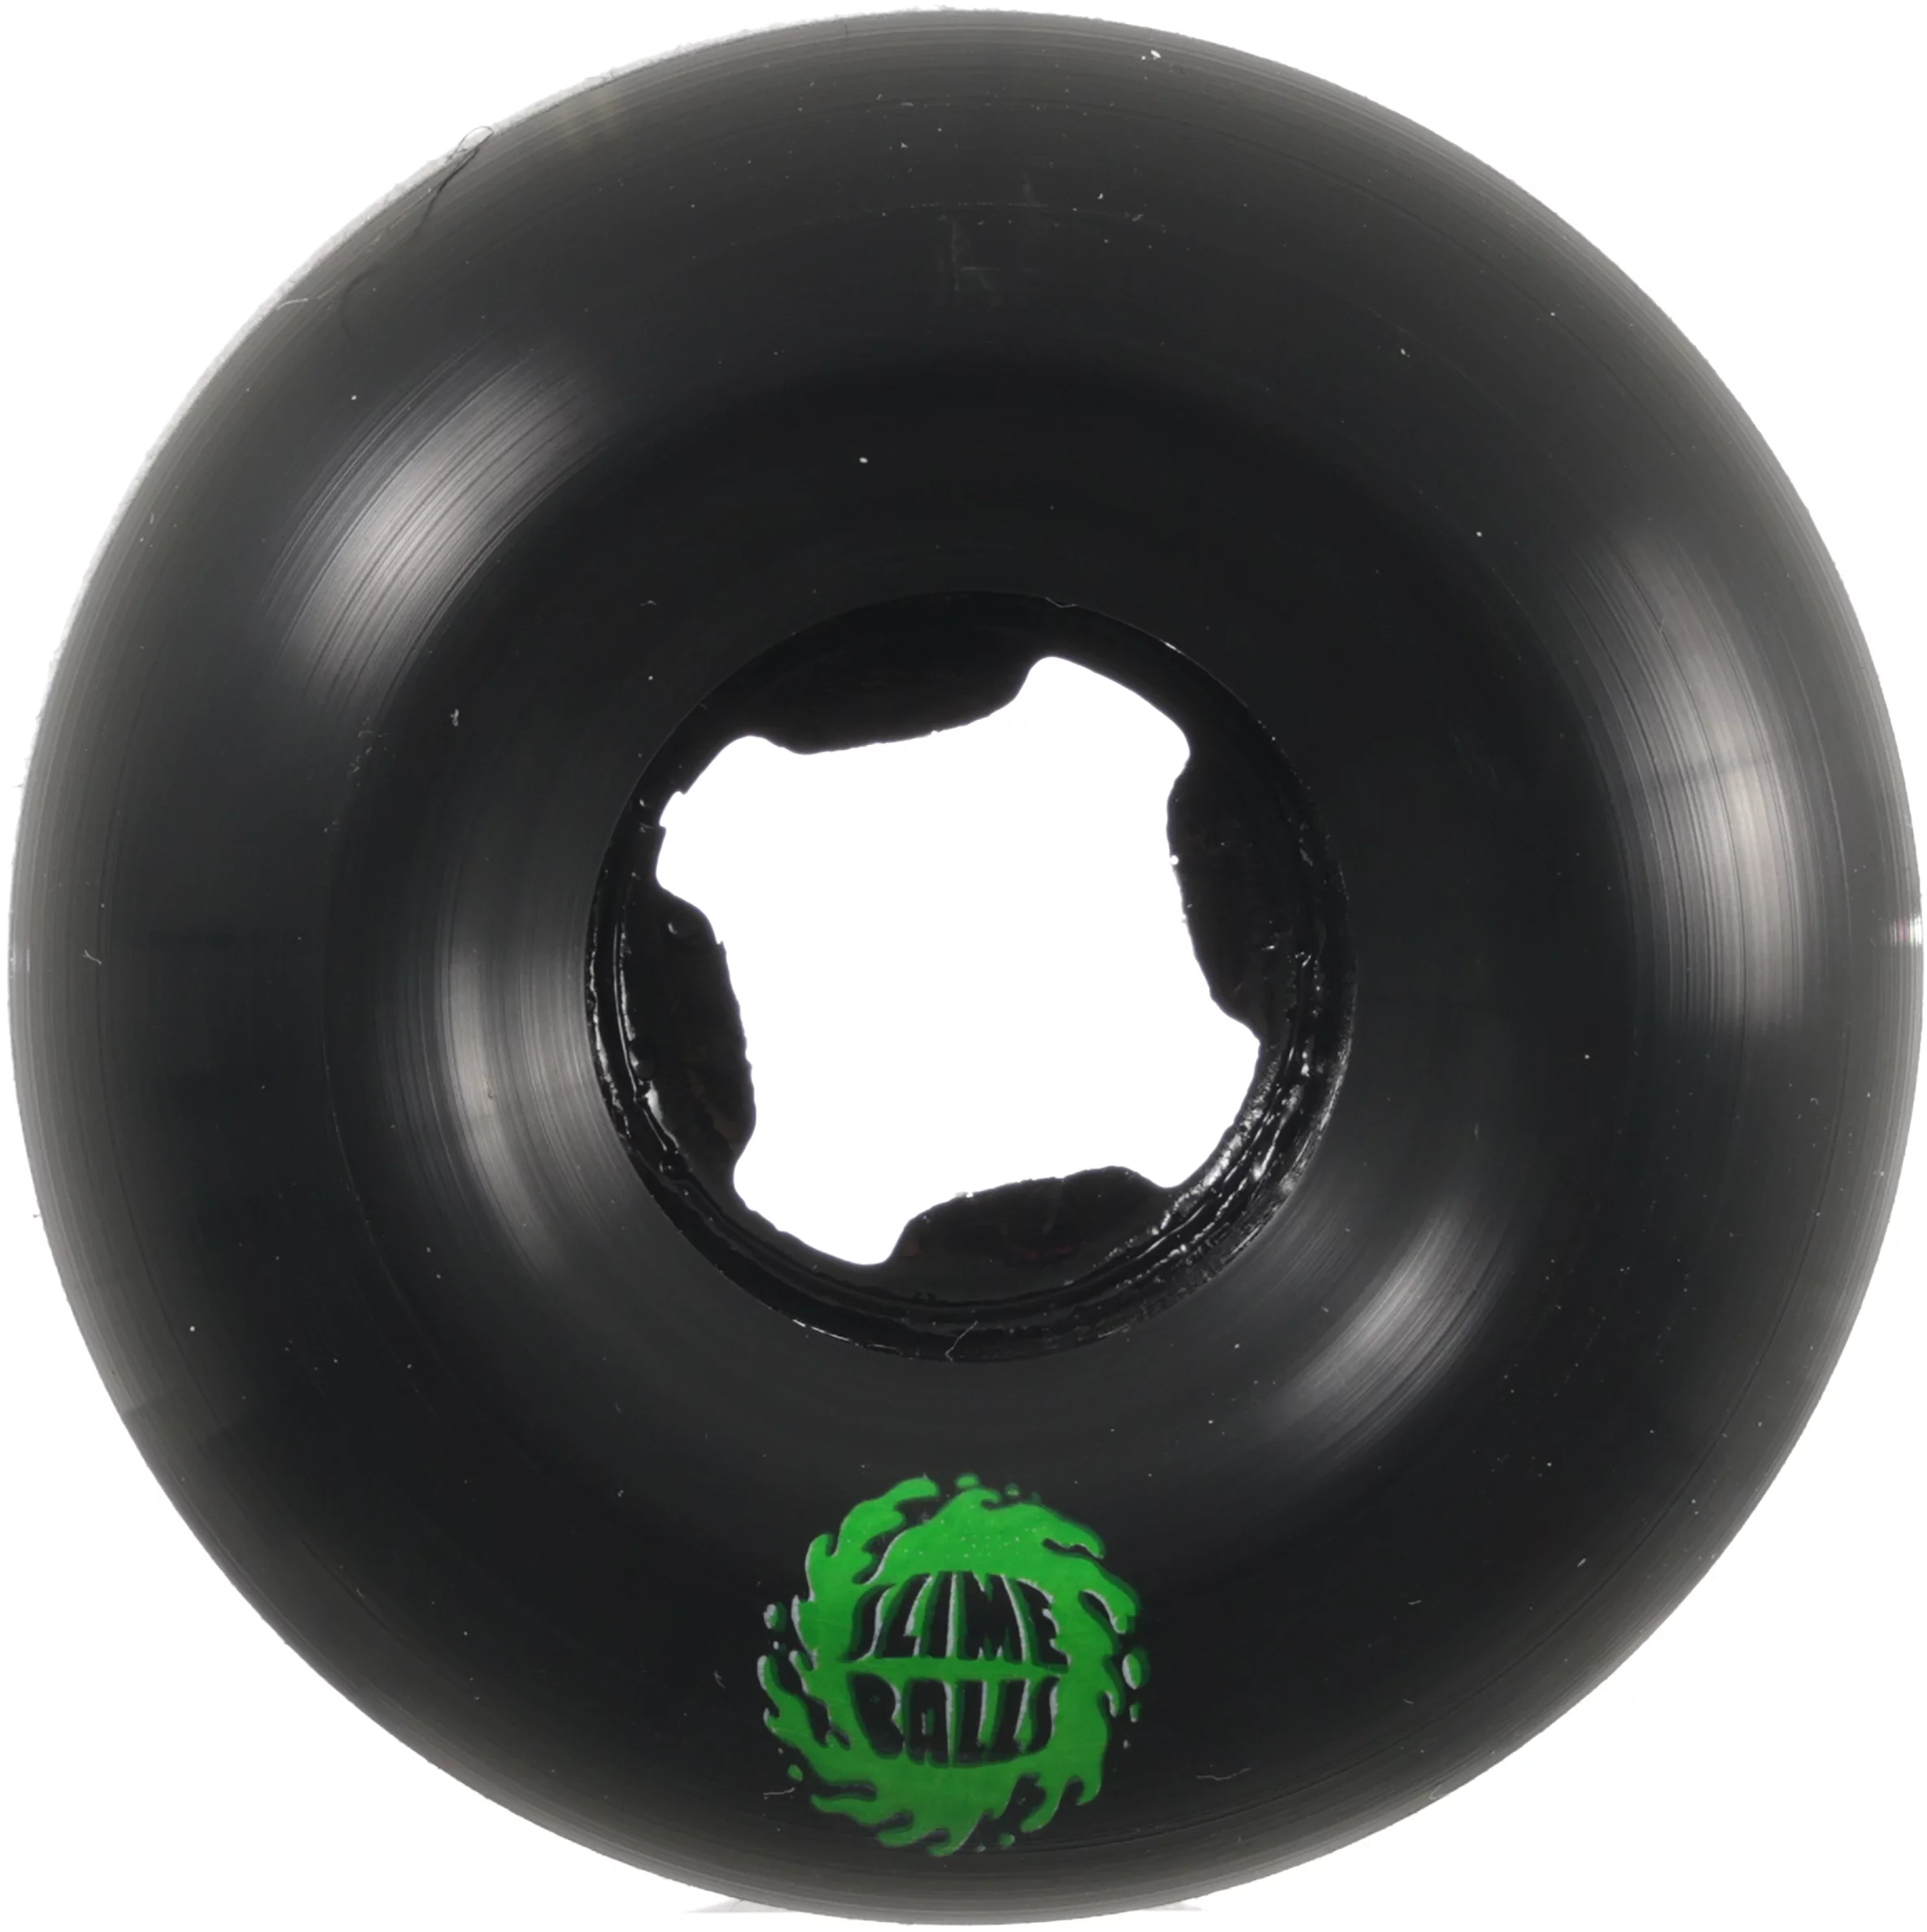 Slime Balls 56mm Double Take Vomit Mini Pink/Black 97a Wheels (set of 4) -  FA SKATES